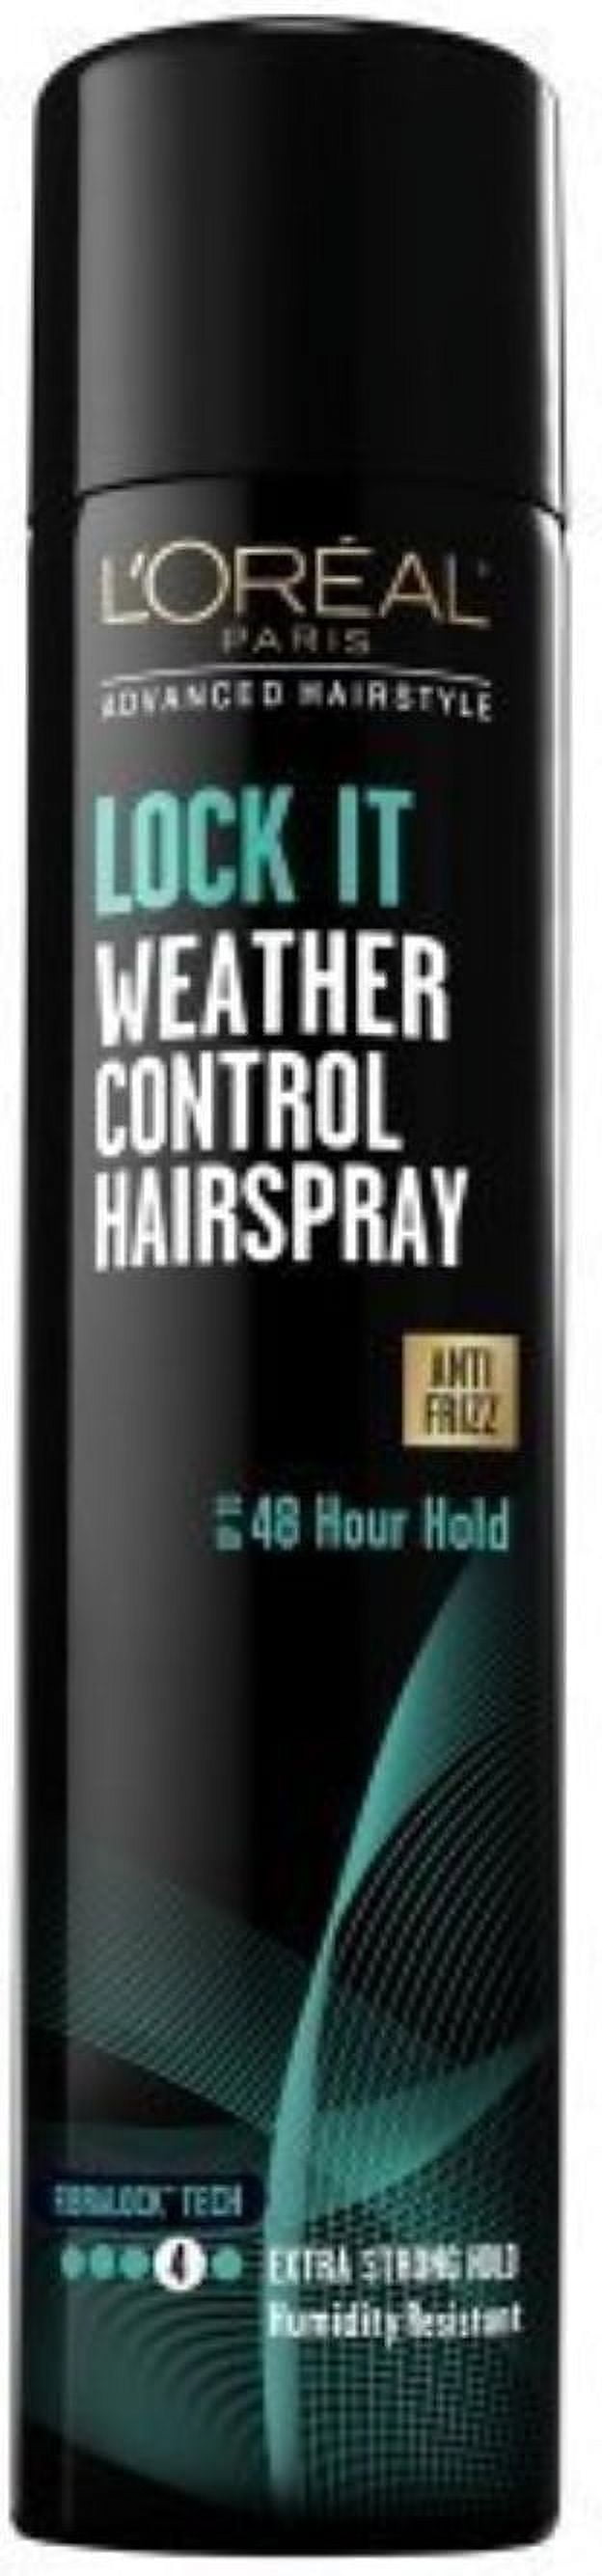 L'Oreal Paris Elnett Satin Extra Strong Hold Hairspray, Humidity Resistant,  2.2 fl oz 